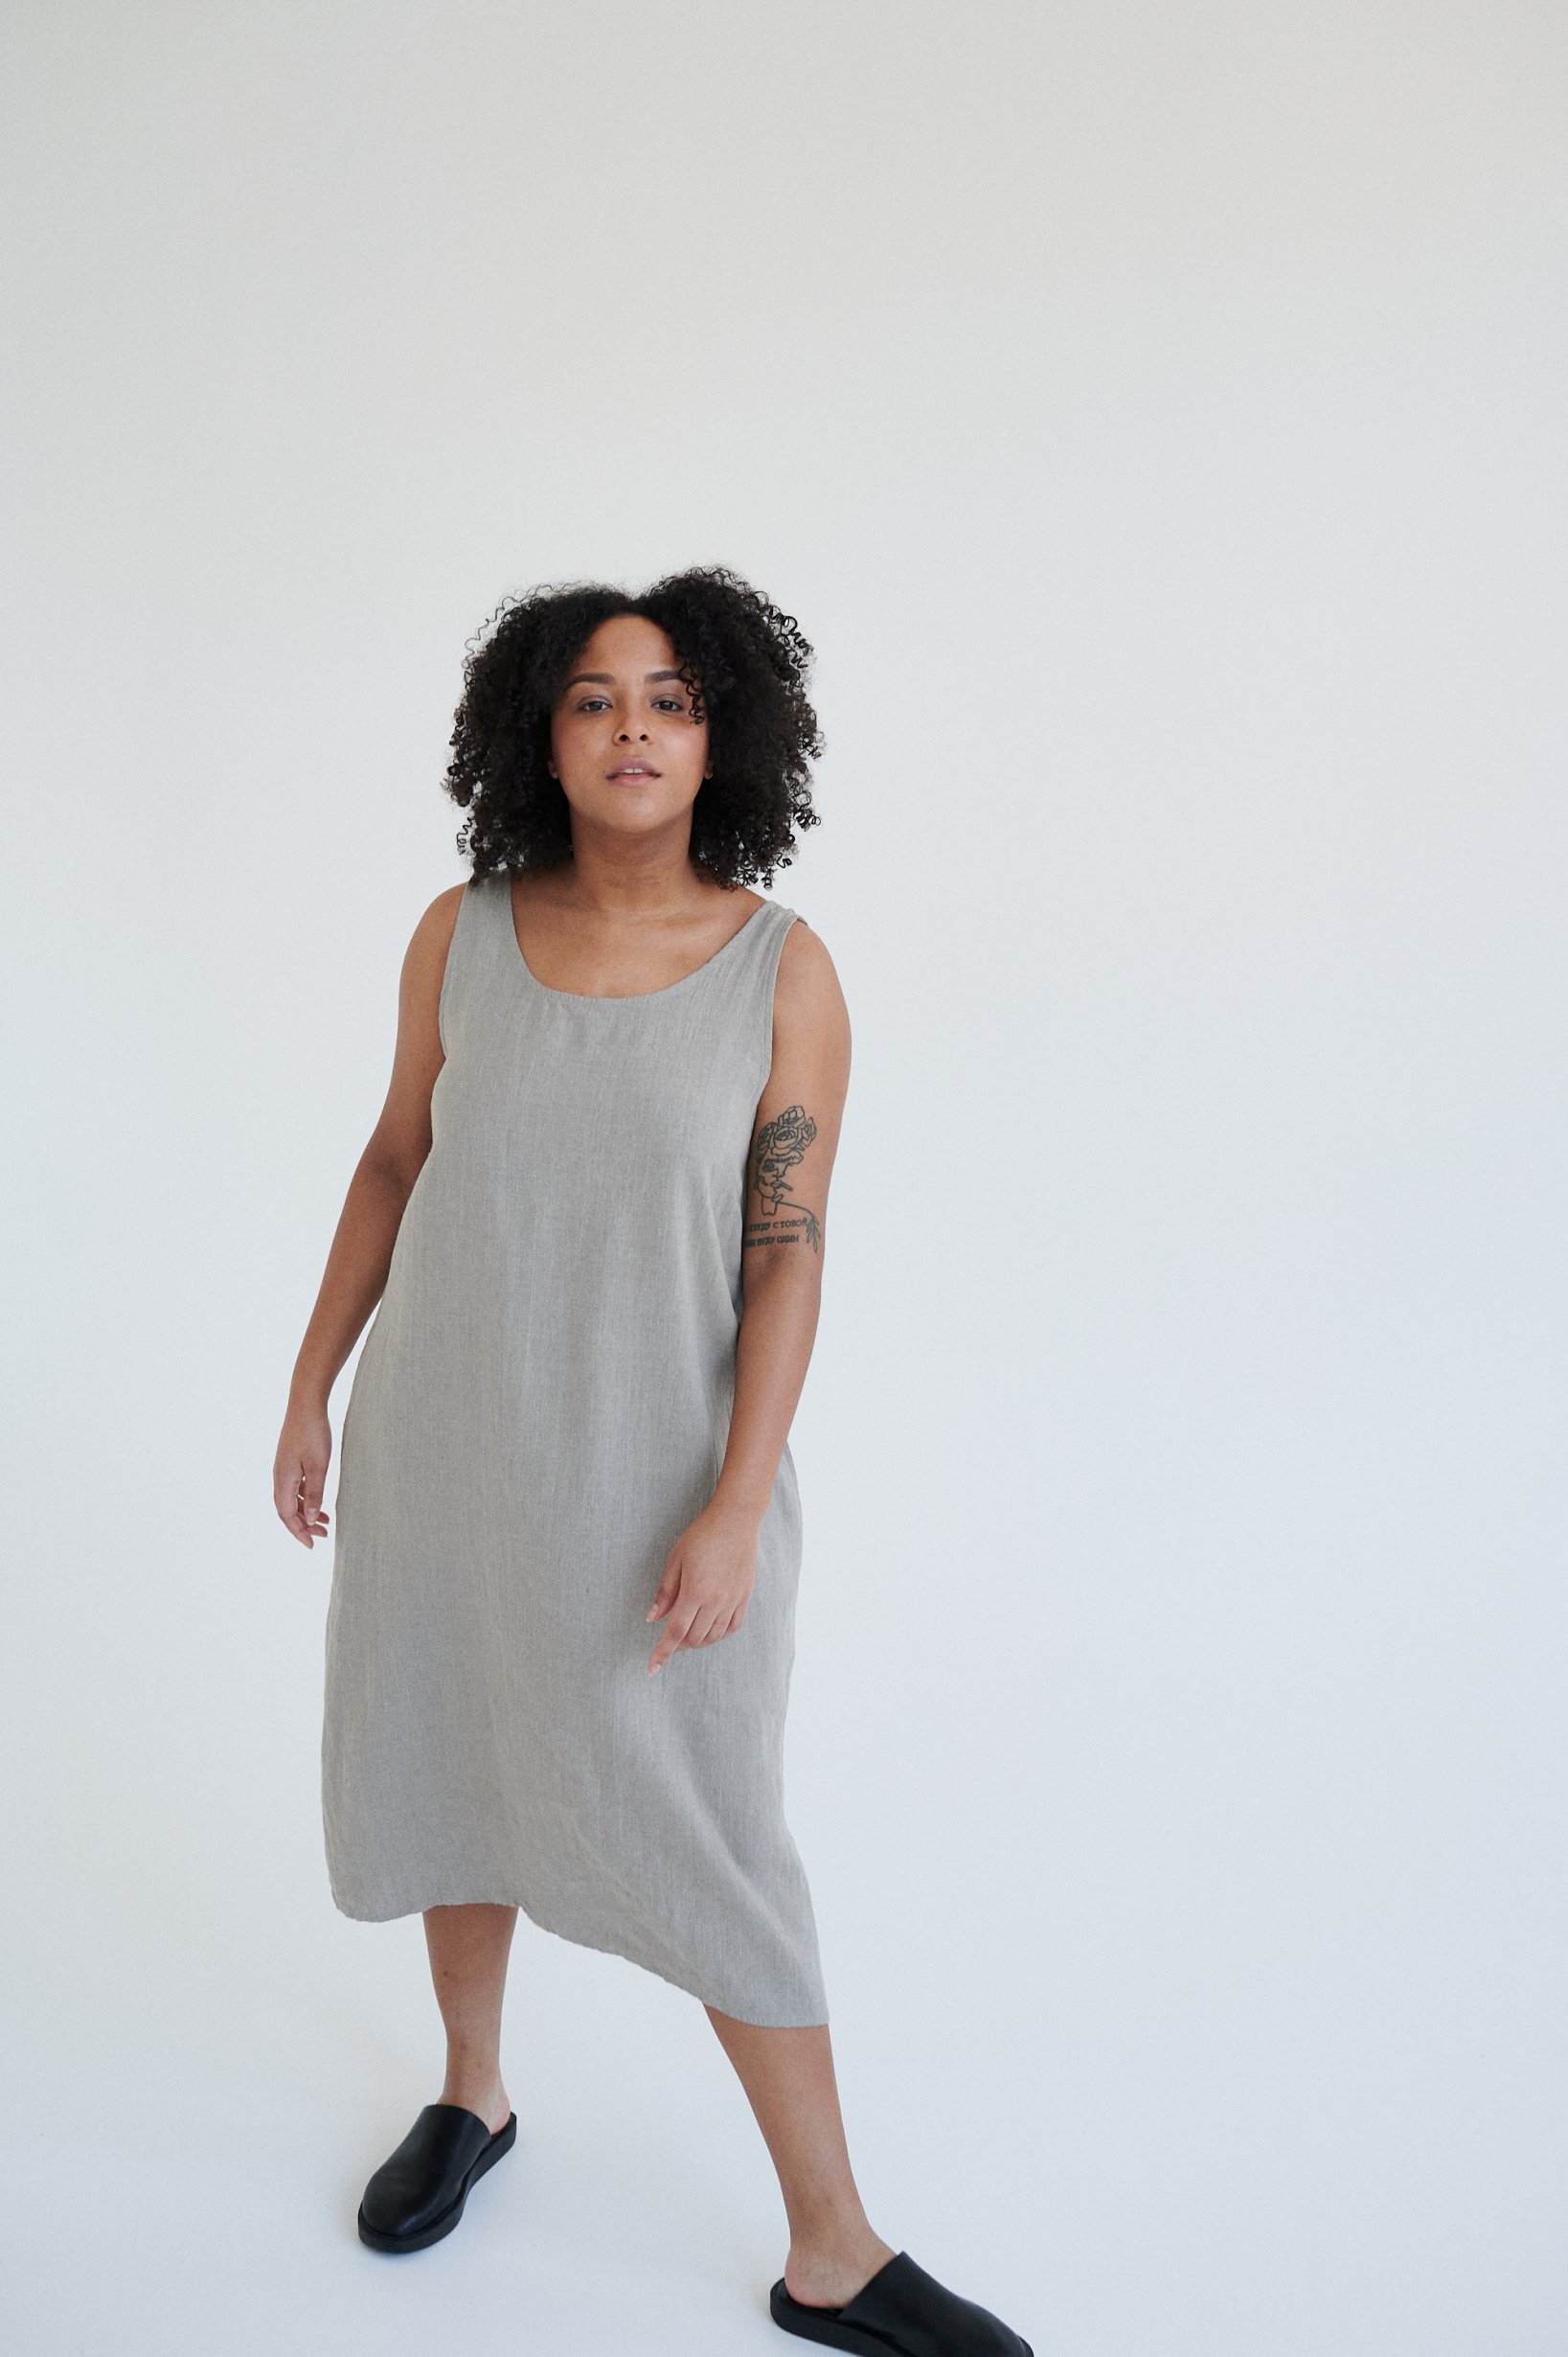 Tami Bra - Free Sewing pattern (Sizes XXS-2XL) - Do It Yourself For Free